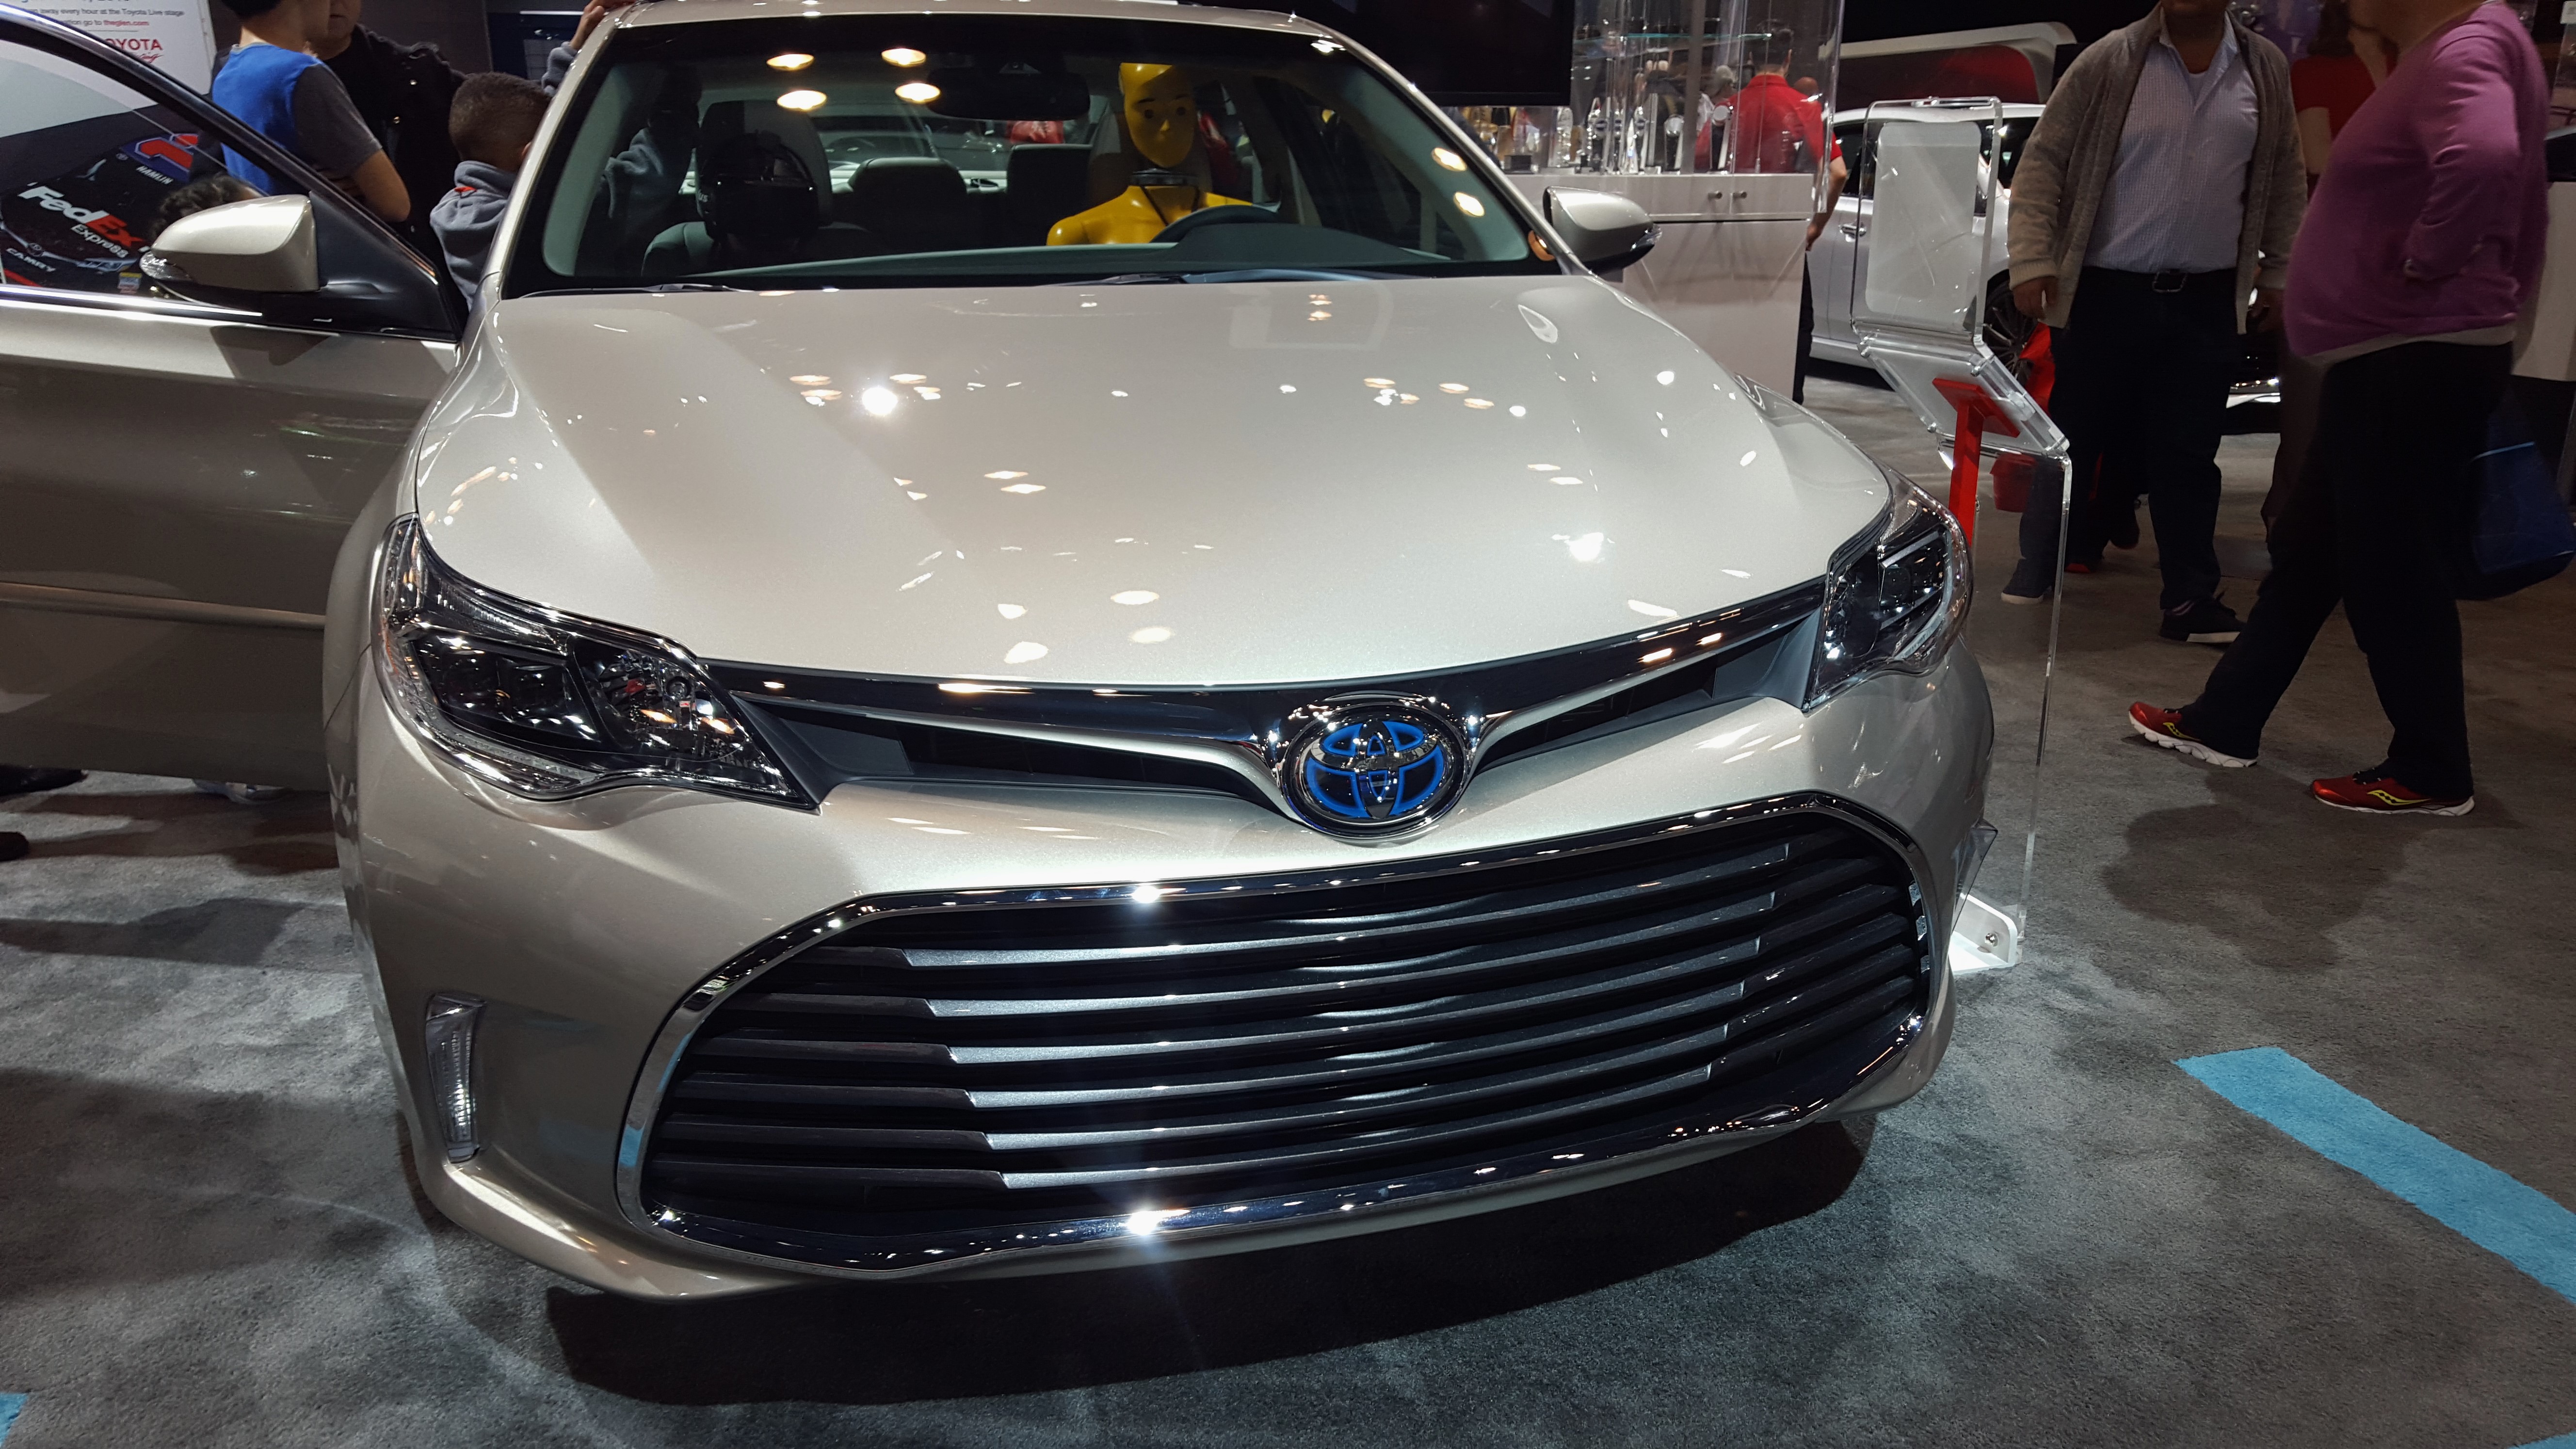 The 2016 Toyota Avalon